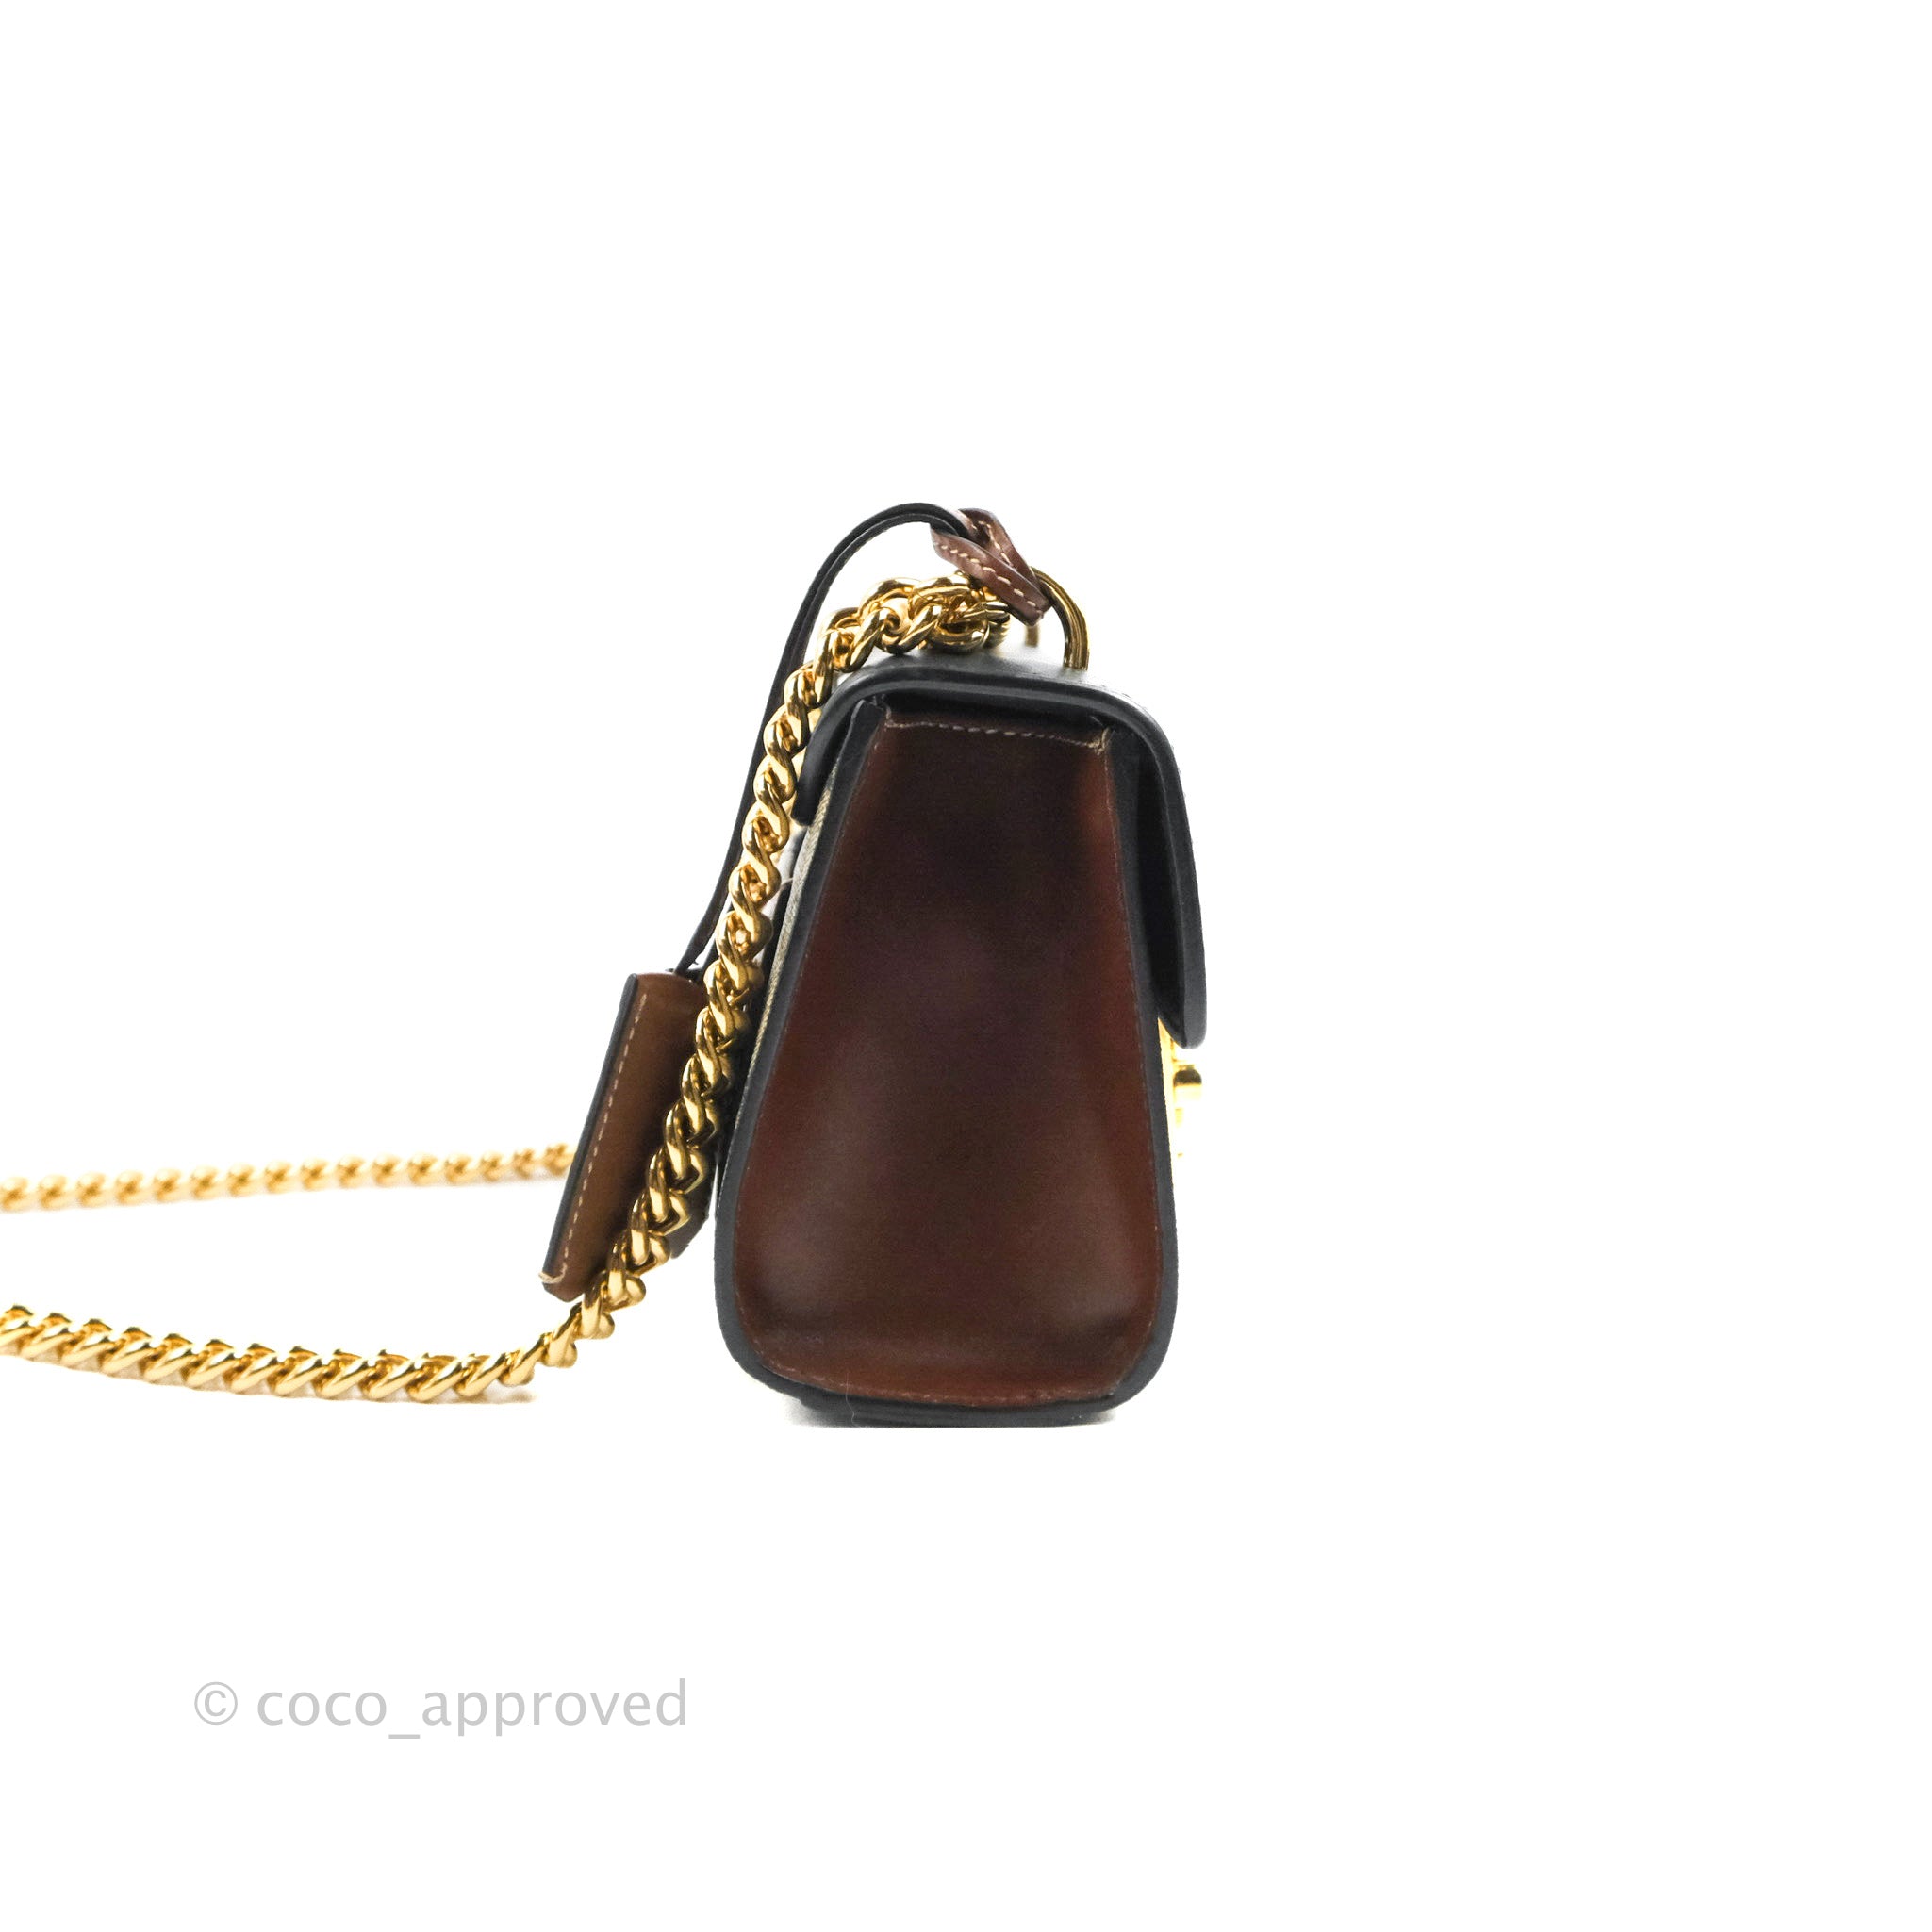 GUCCI Shoulder bag PADLOCK GG SUPREME SMALL in beige / ebony / tuscany brown